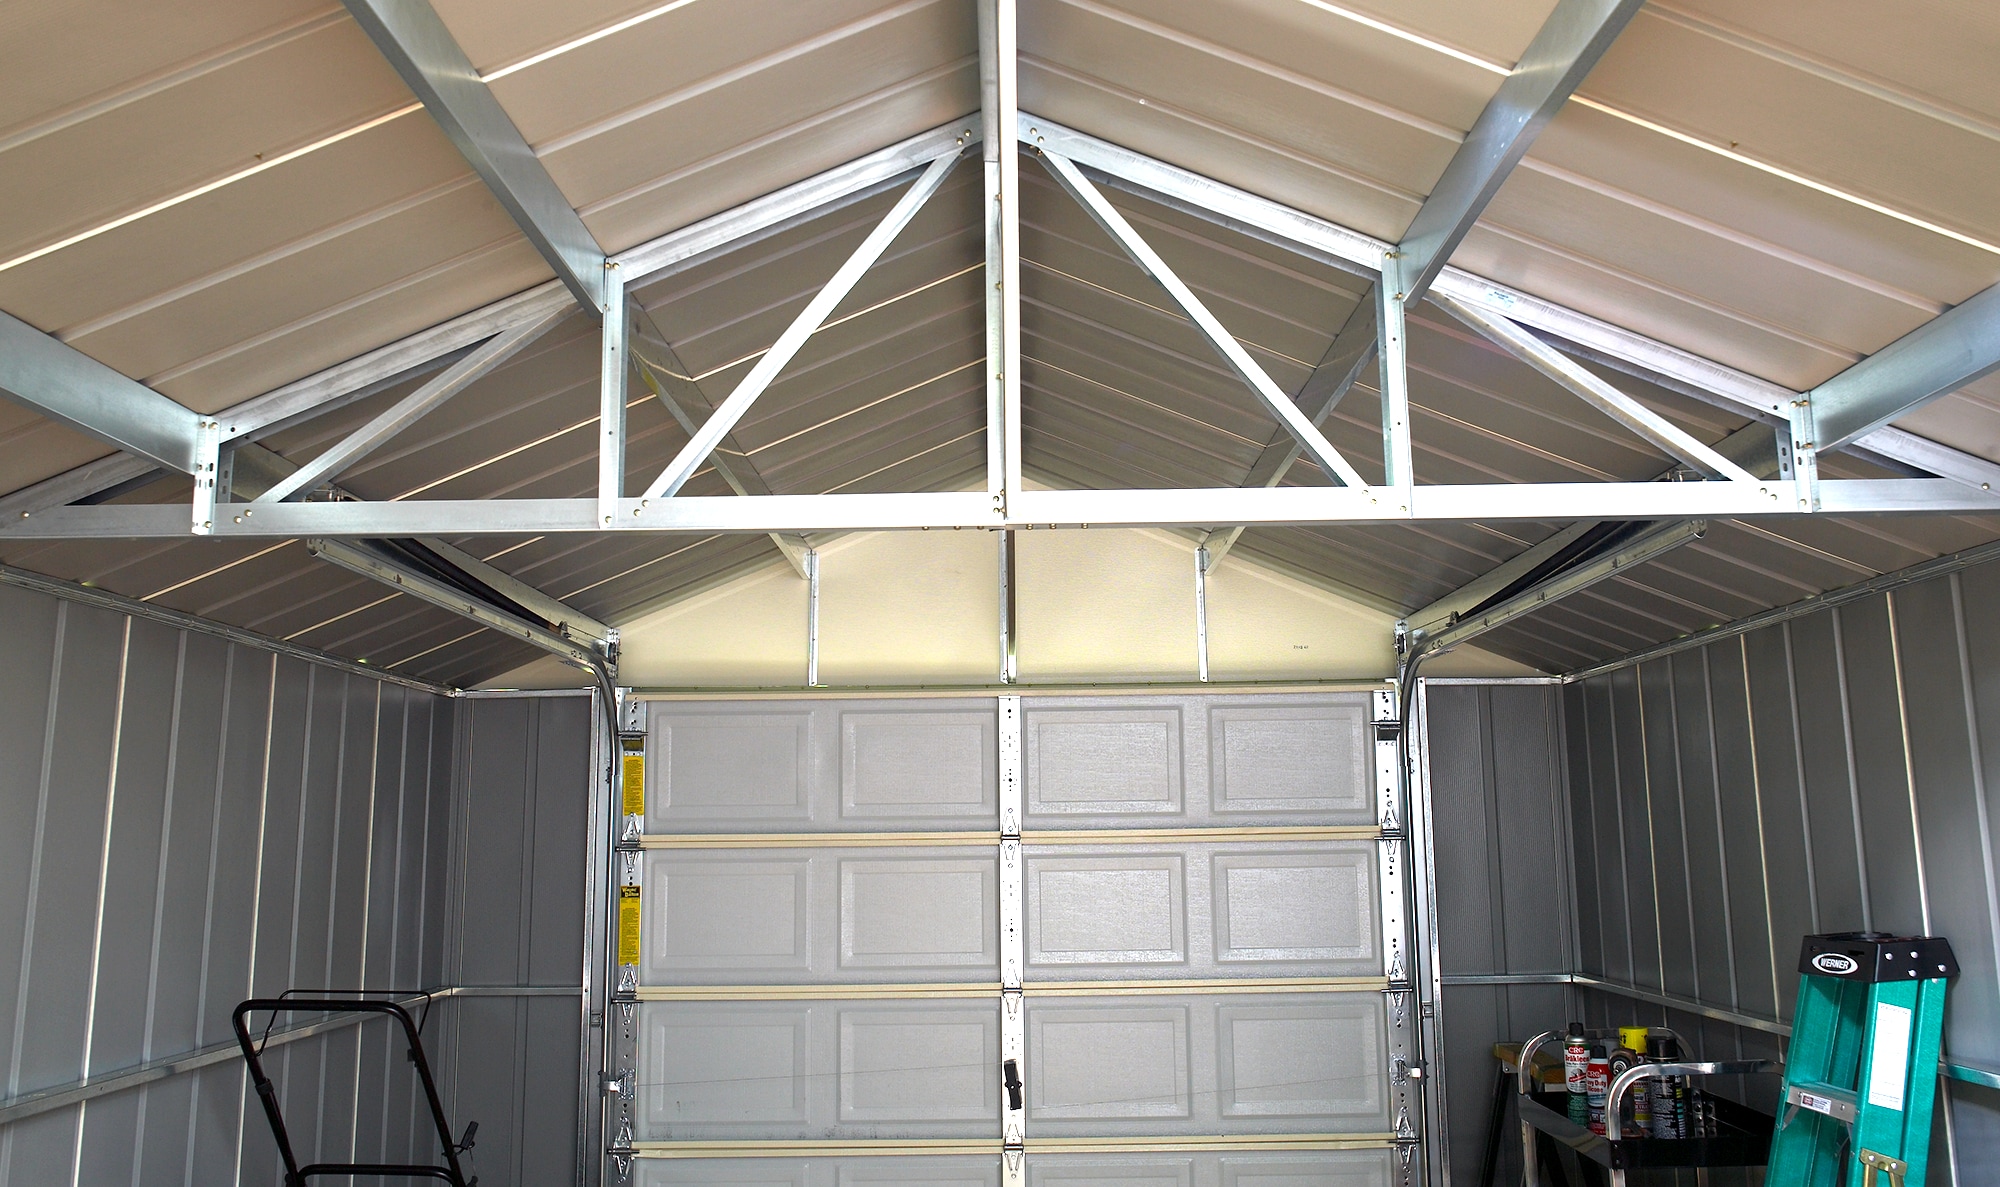 Arrow 12-ft x 17-ft Metal Single Car Garage Building in the Garage  Buildings department at